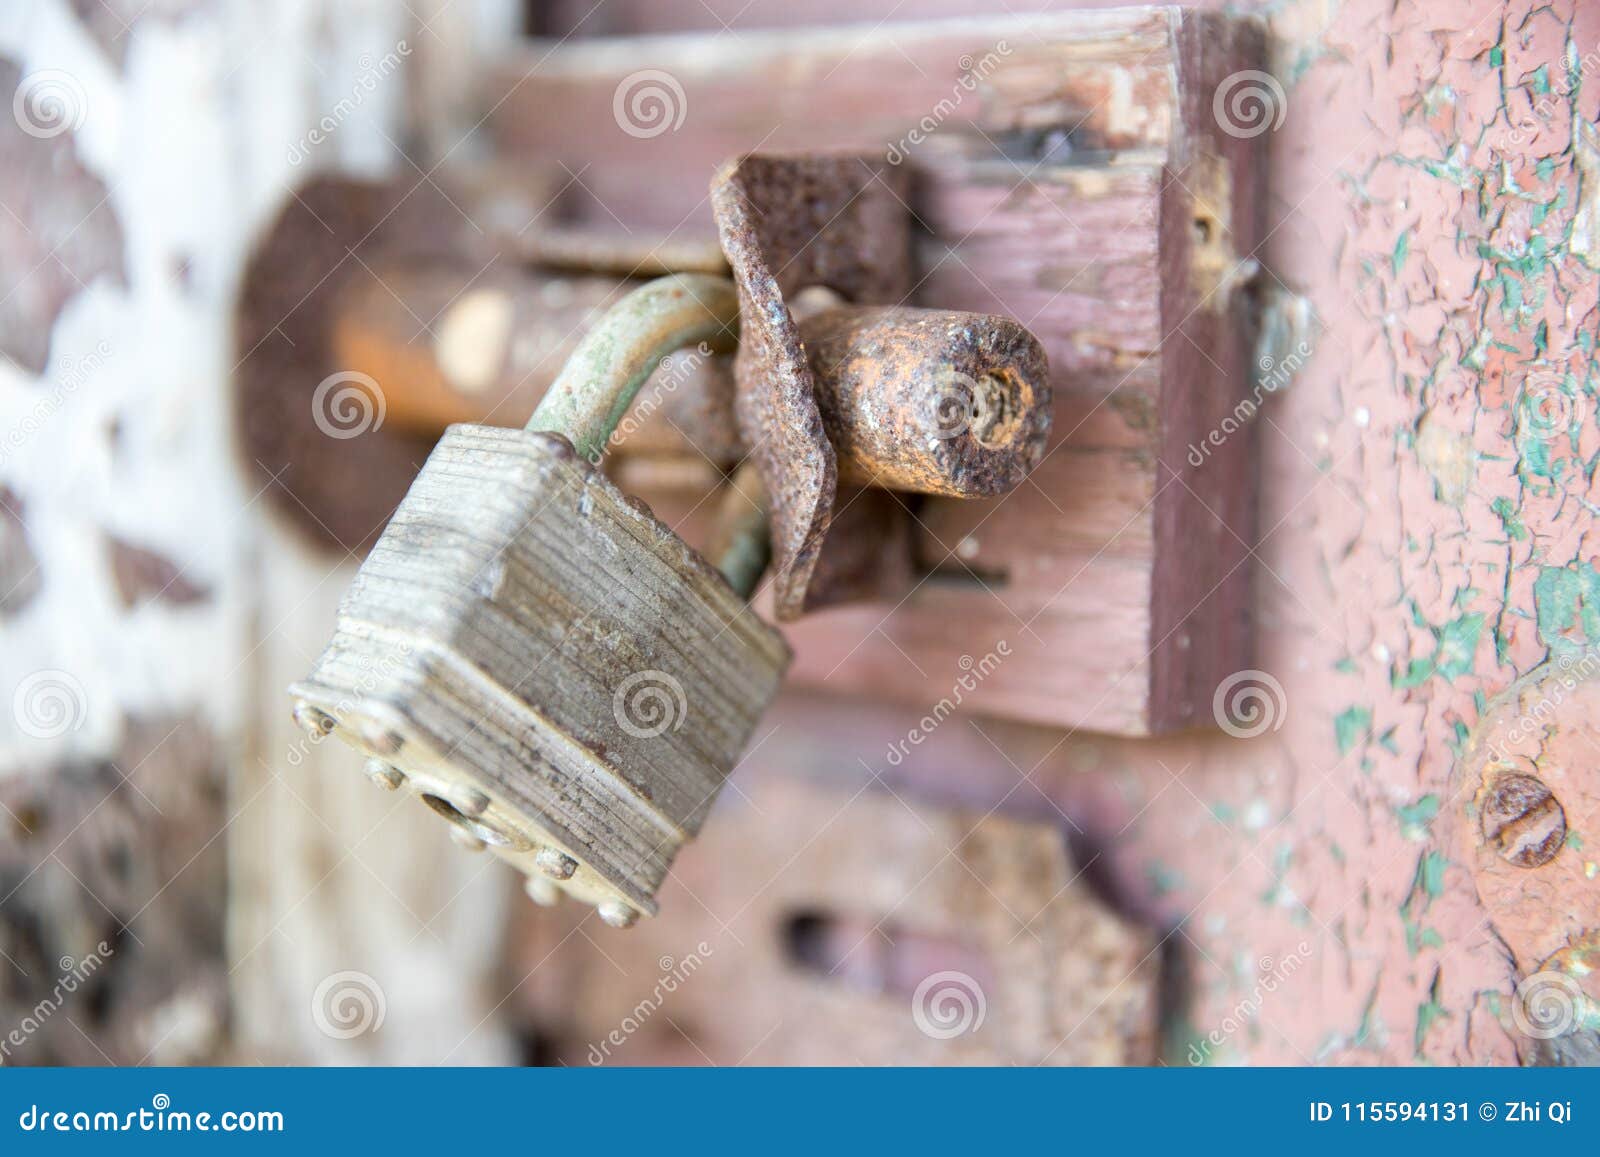 Closeup Of Old Lock On Red Metal Garage Door Stock Image Image Of Church House 115594131